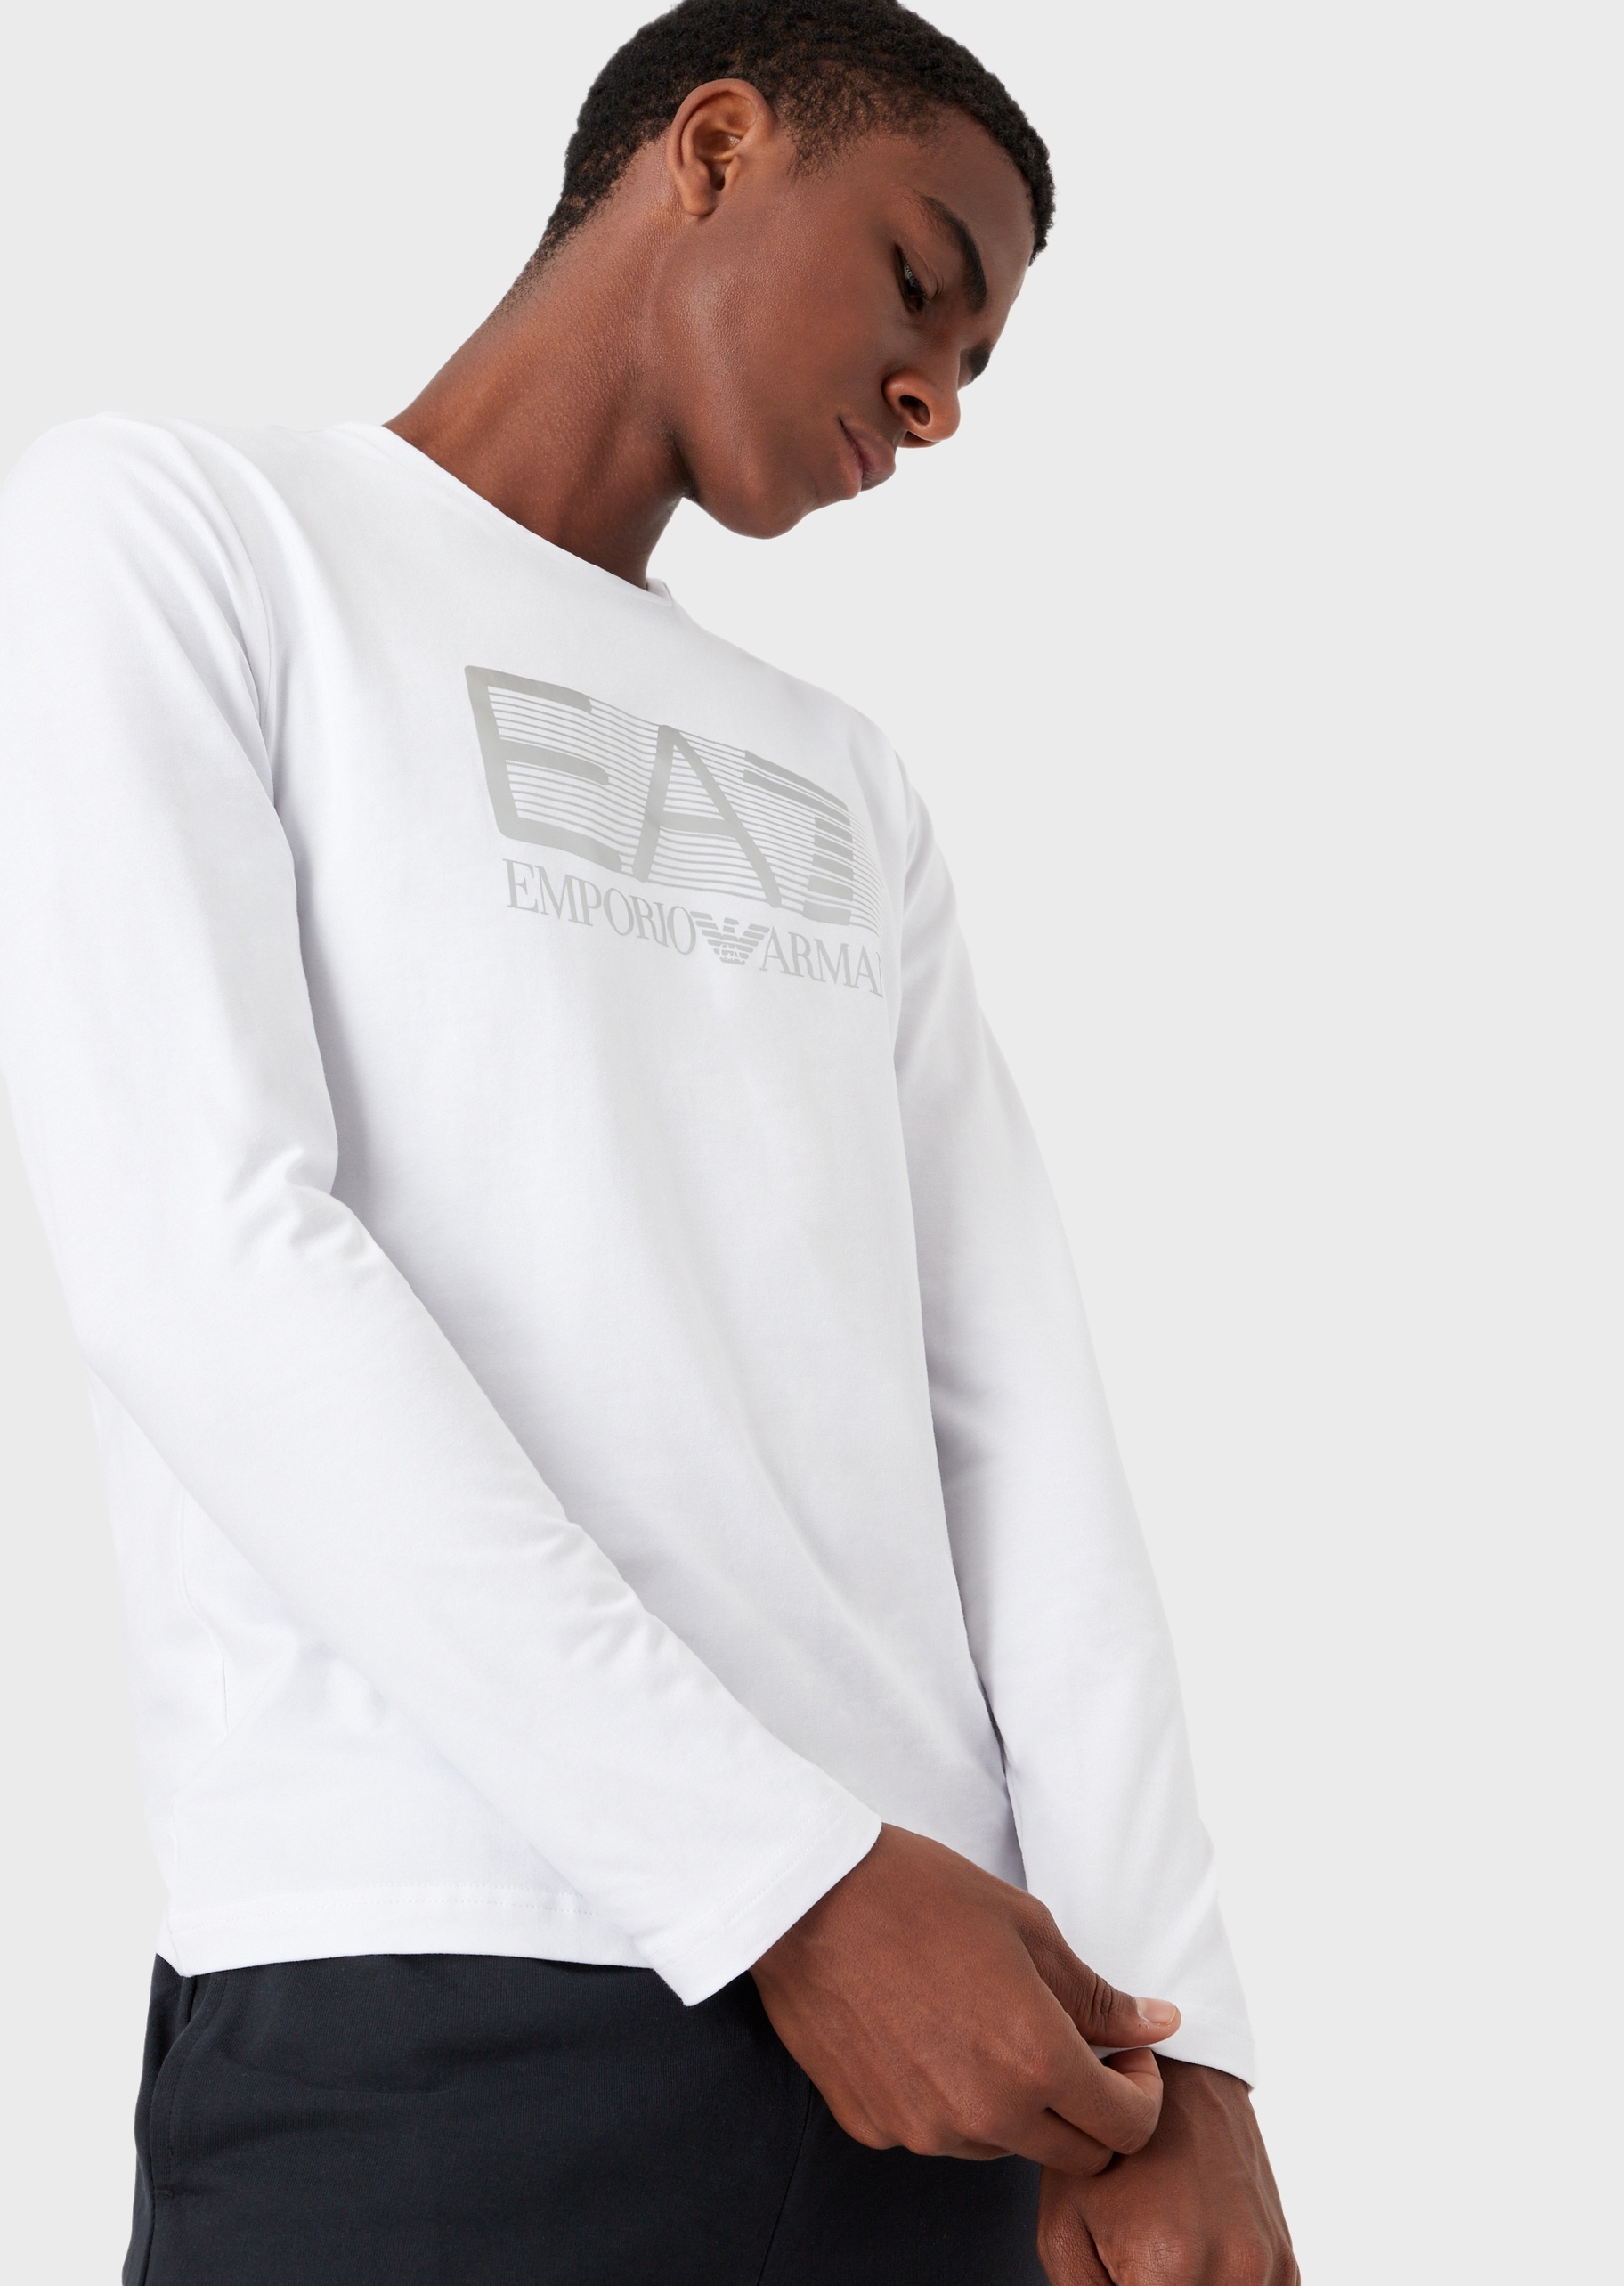 EA7 经典圆领长袖T恤